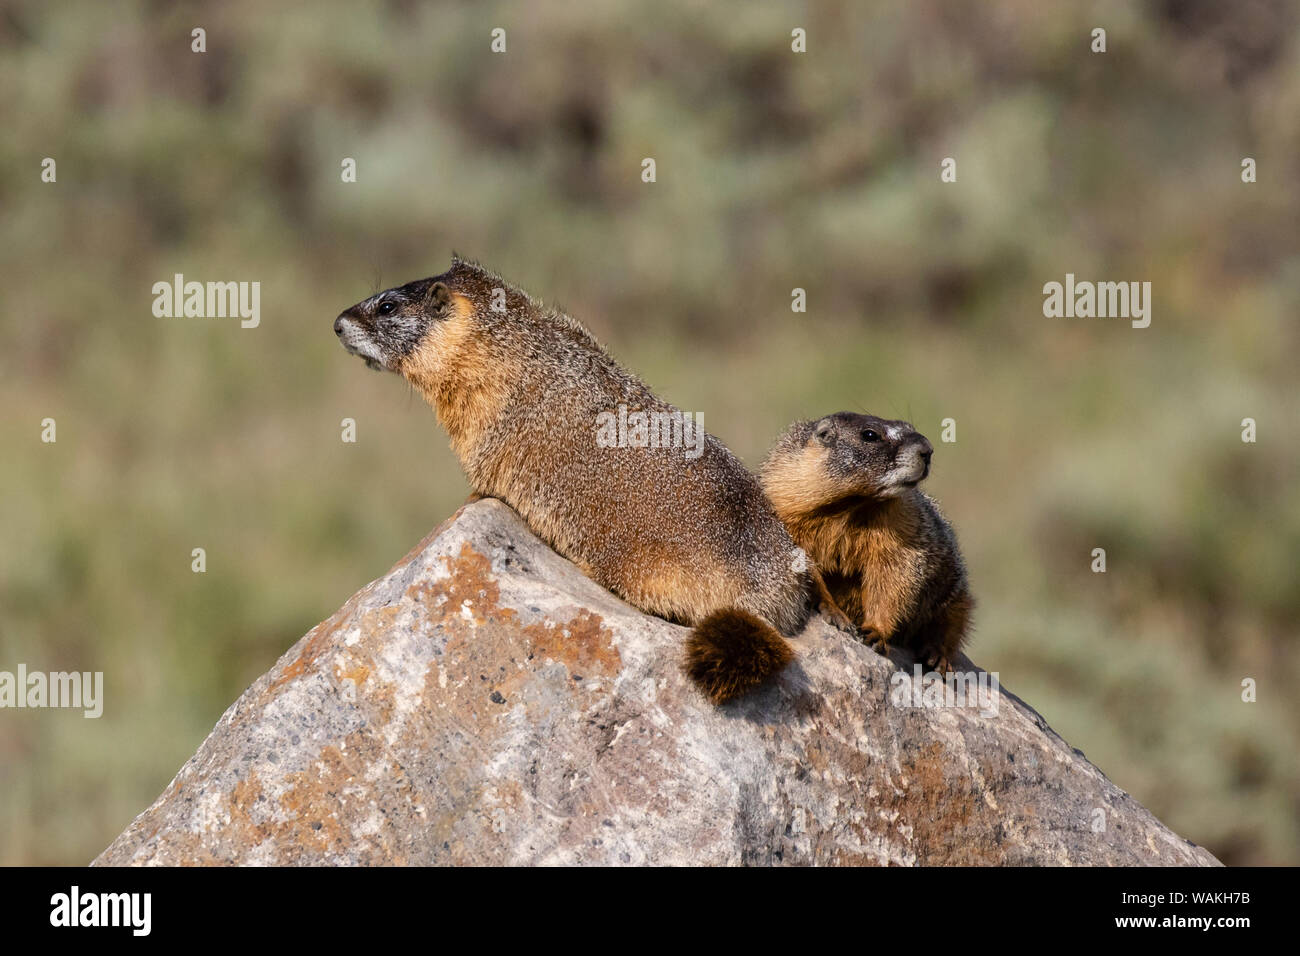 Yellow-bellied marmot (Marmota flaviventris) adults sunning on rock. Stock Photo